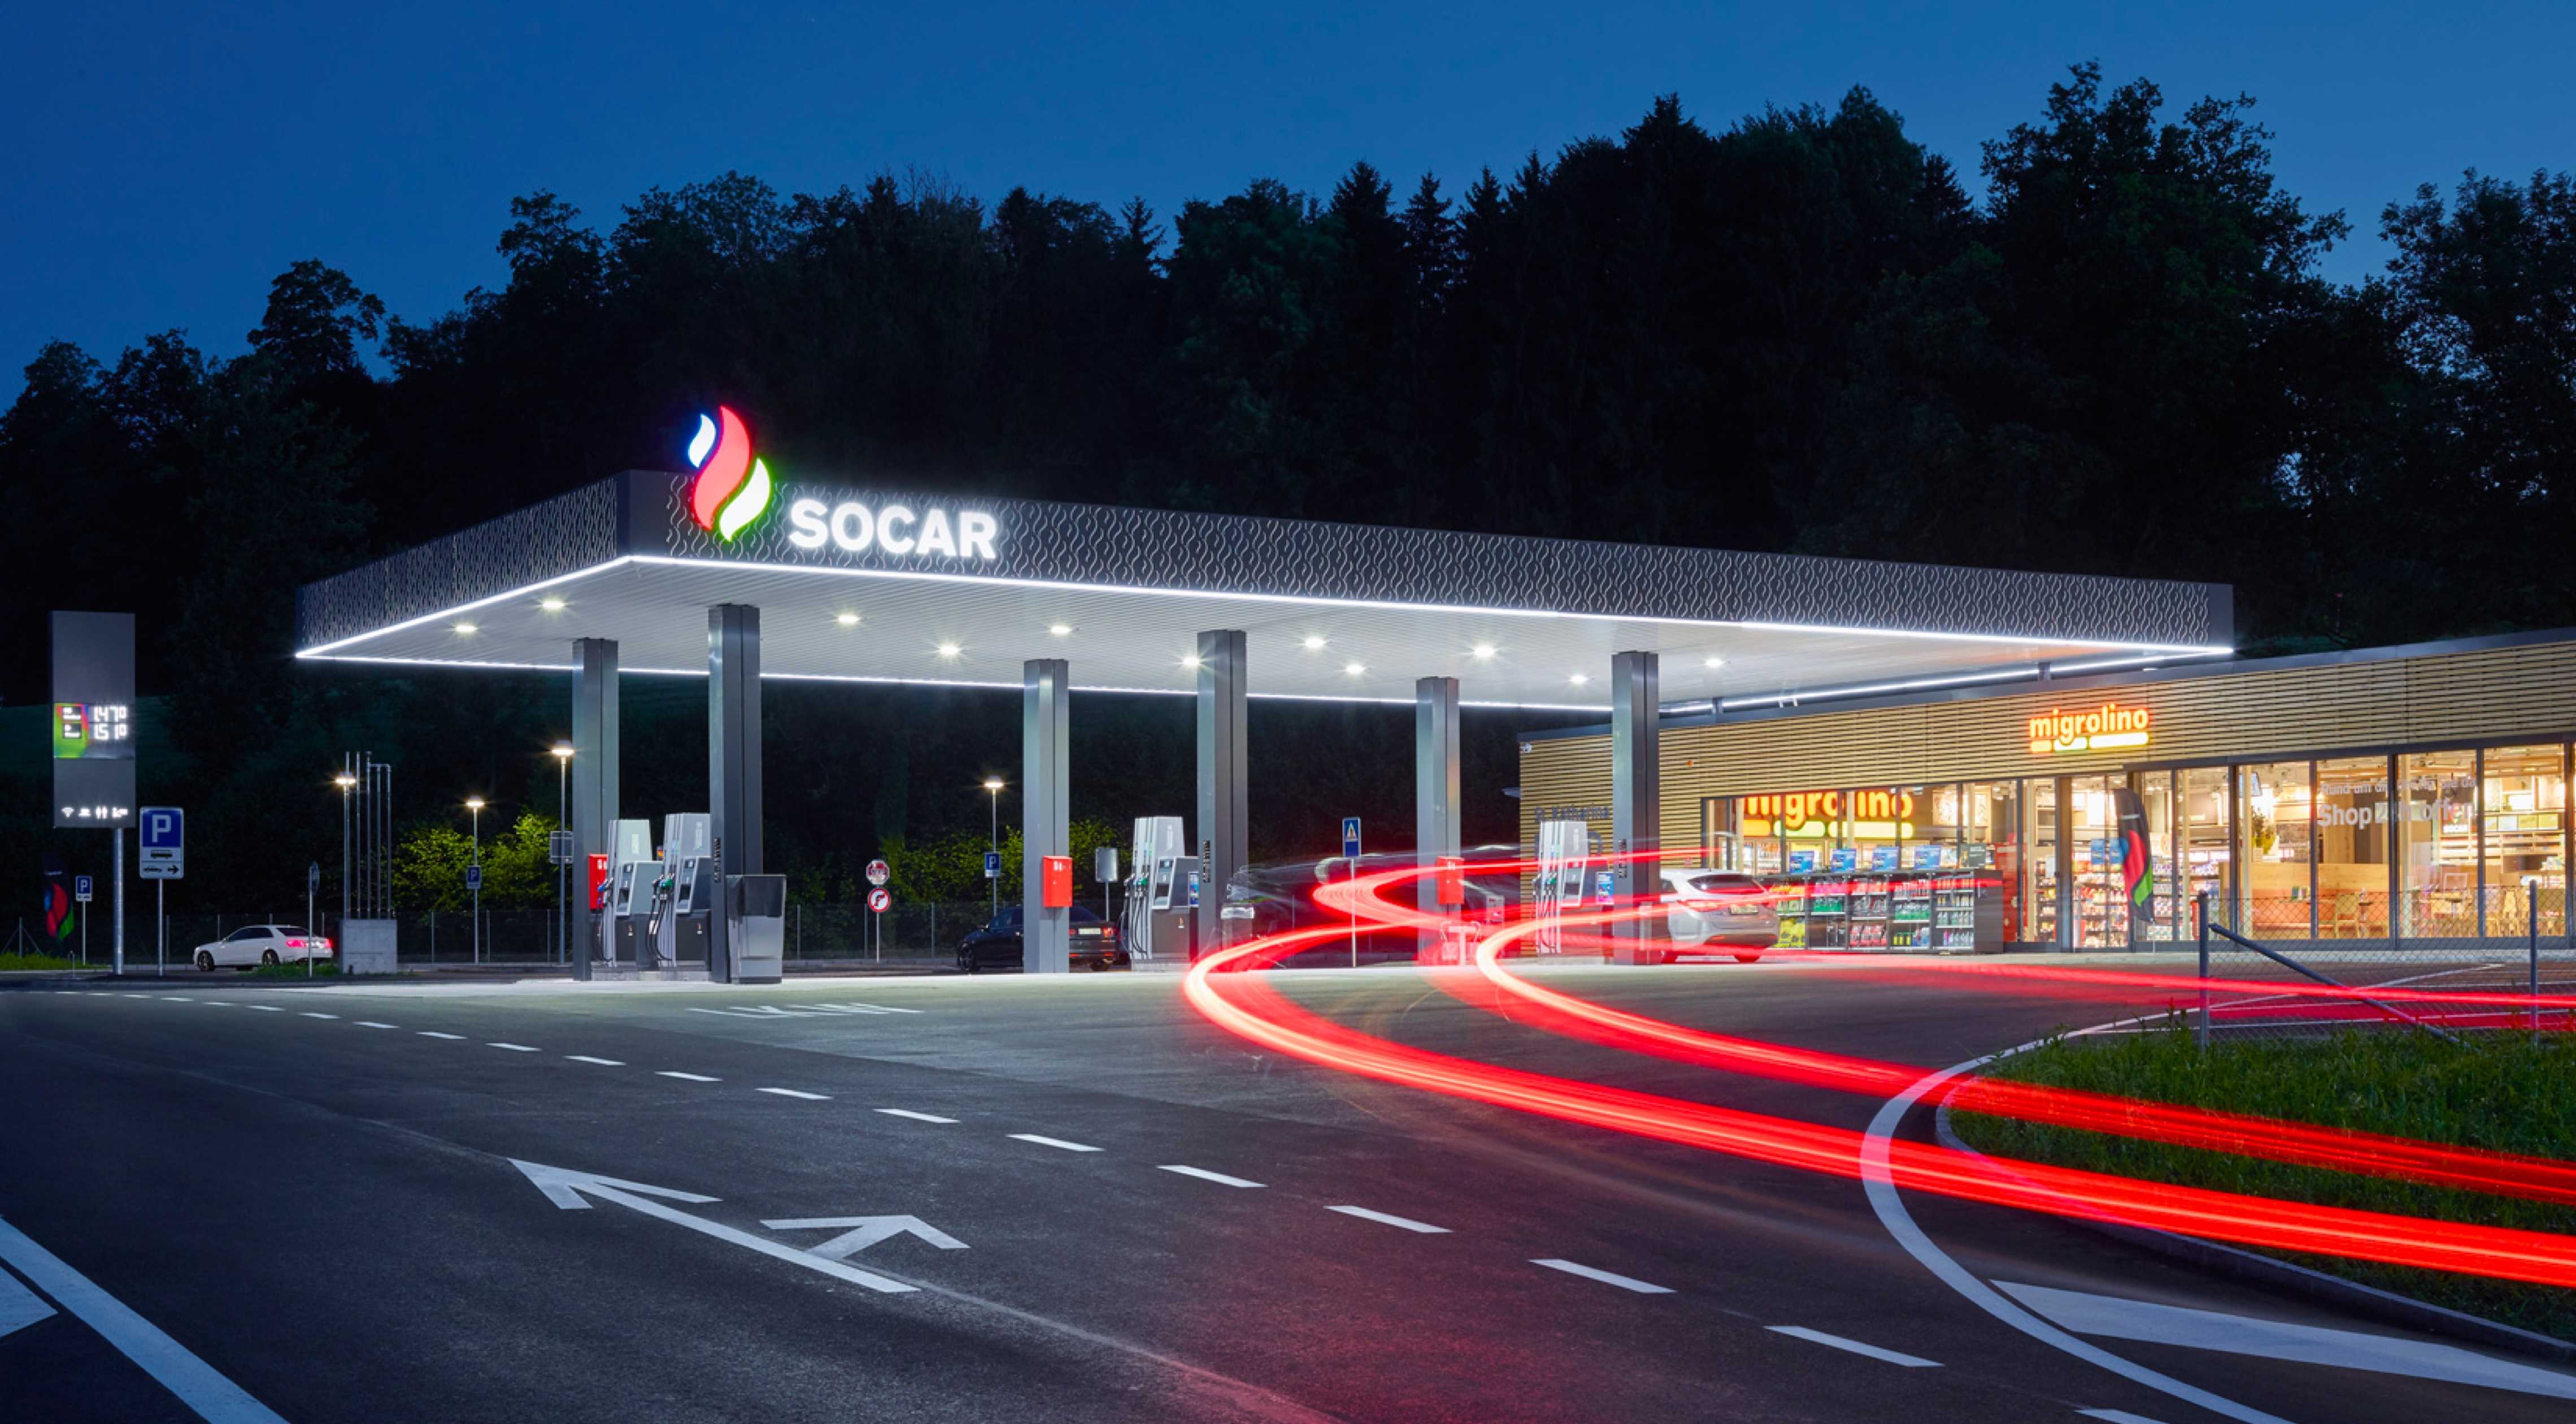 Gas station in Zurich Switzerland where user research was done